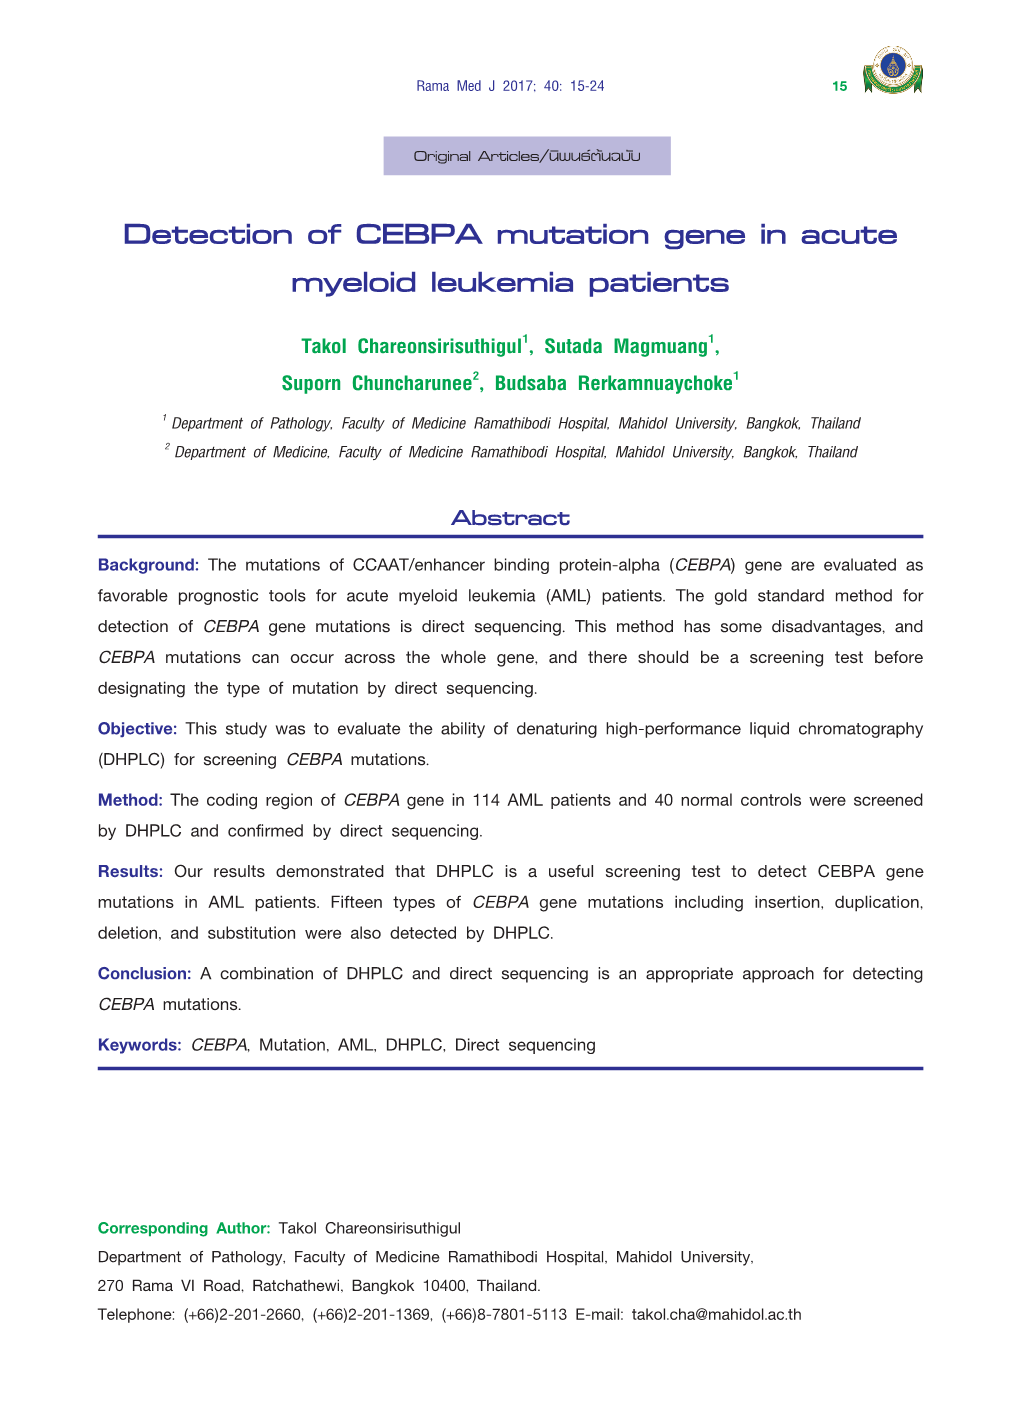 Detection of CEBPA Mutation Gene in Acute Myeloid Leukemia Patients